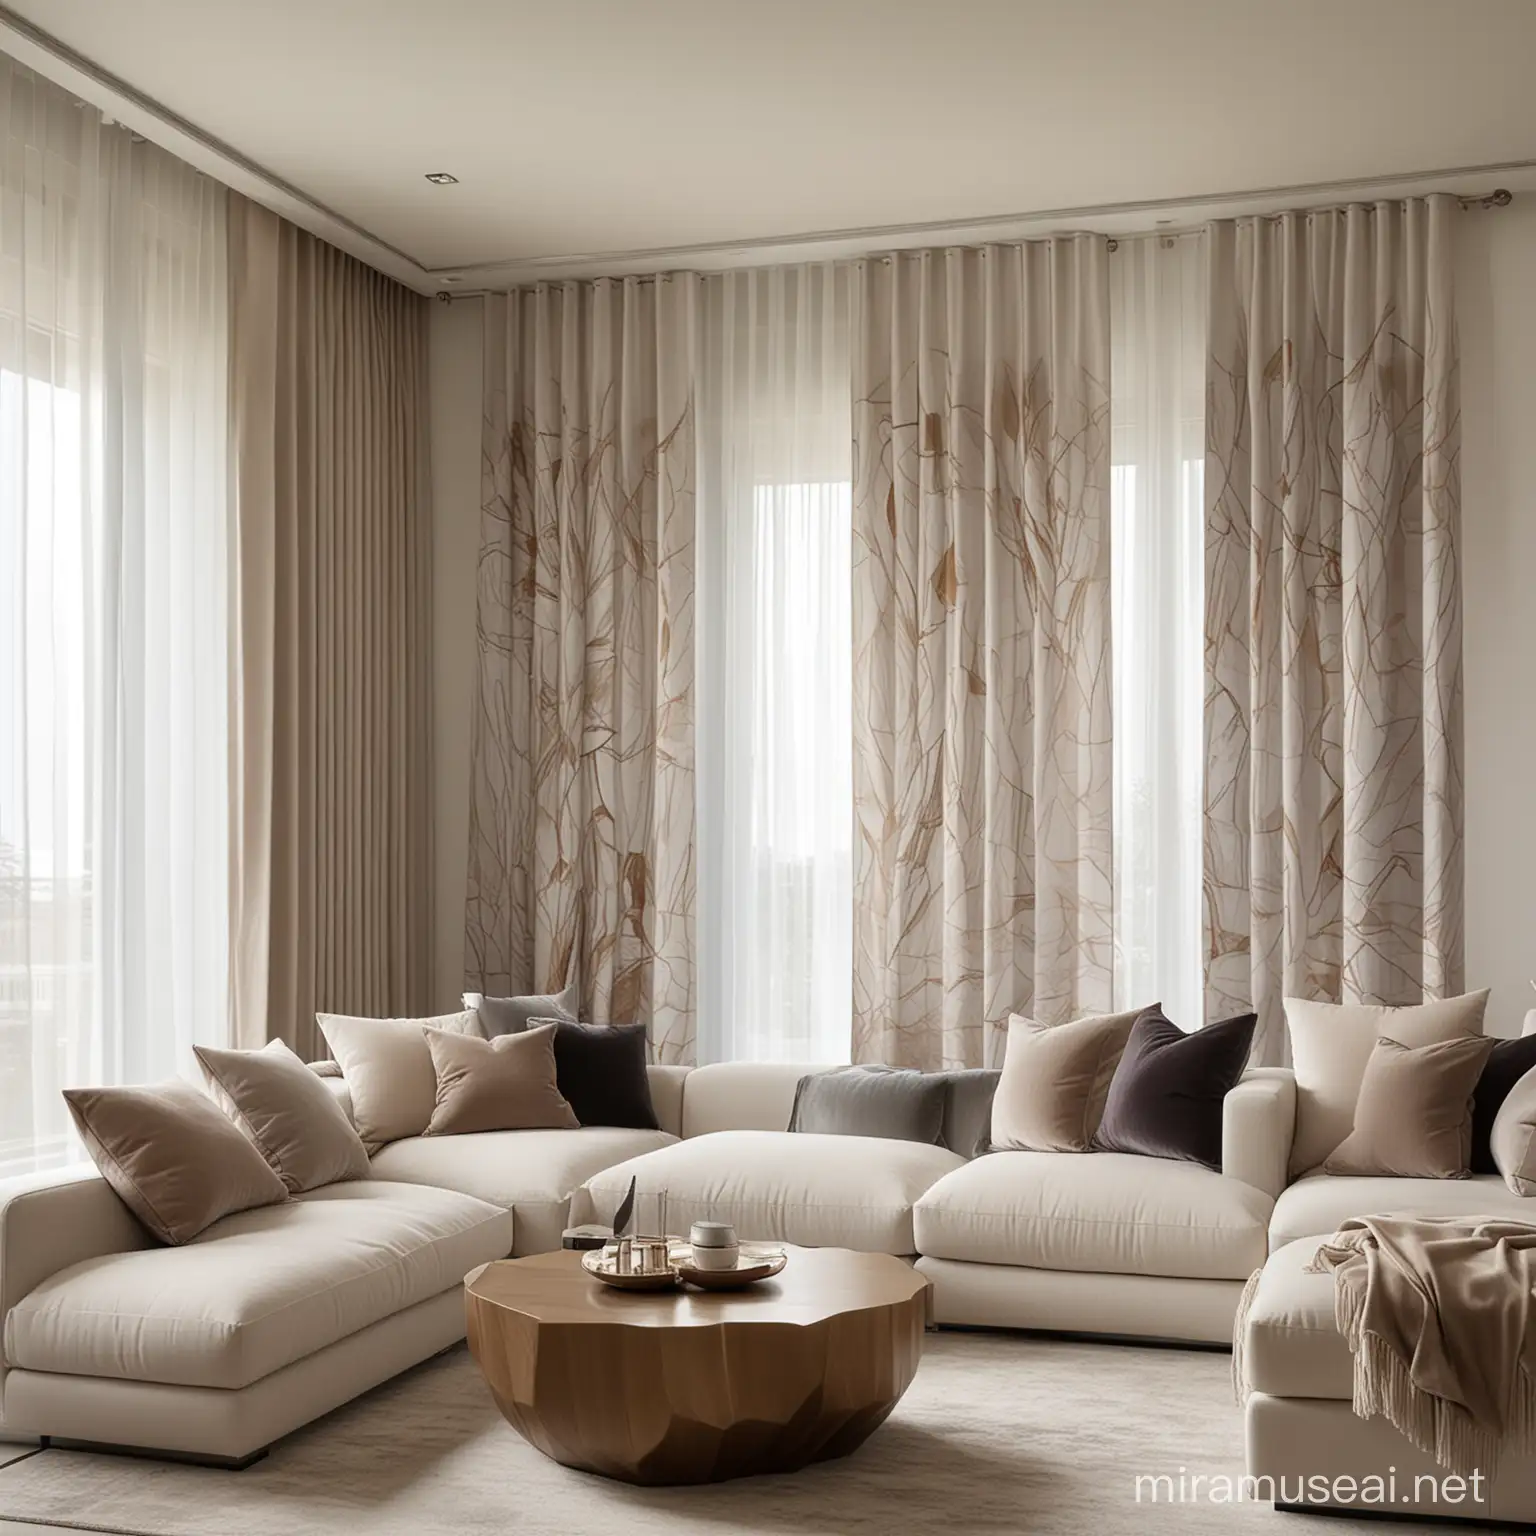 Contemporary Quartz Living Room with Artistic Wall Decor and Elegant Curtains